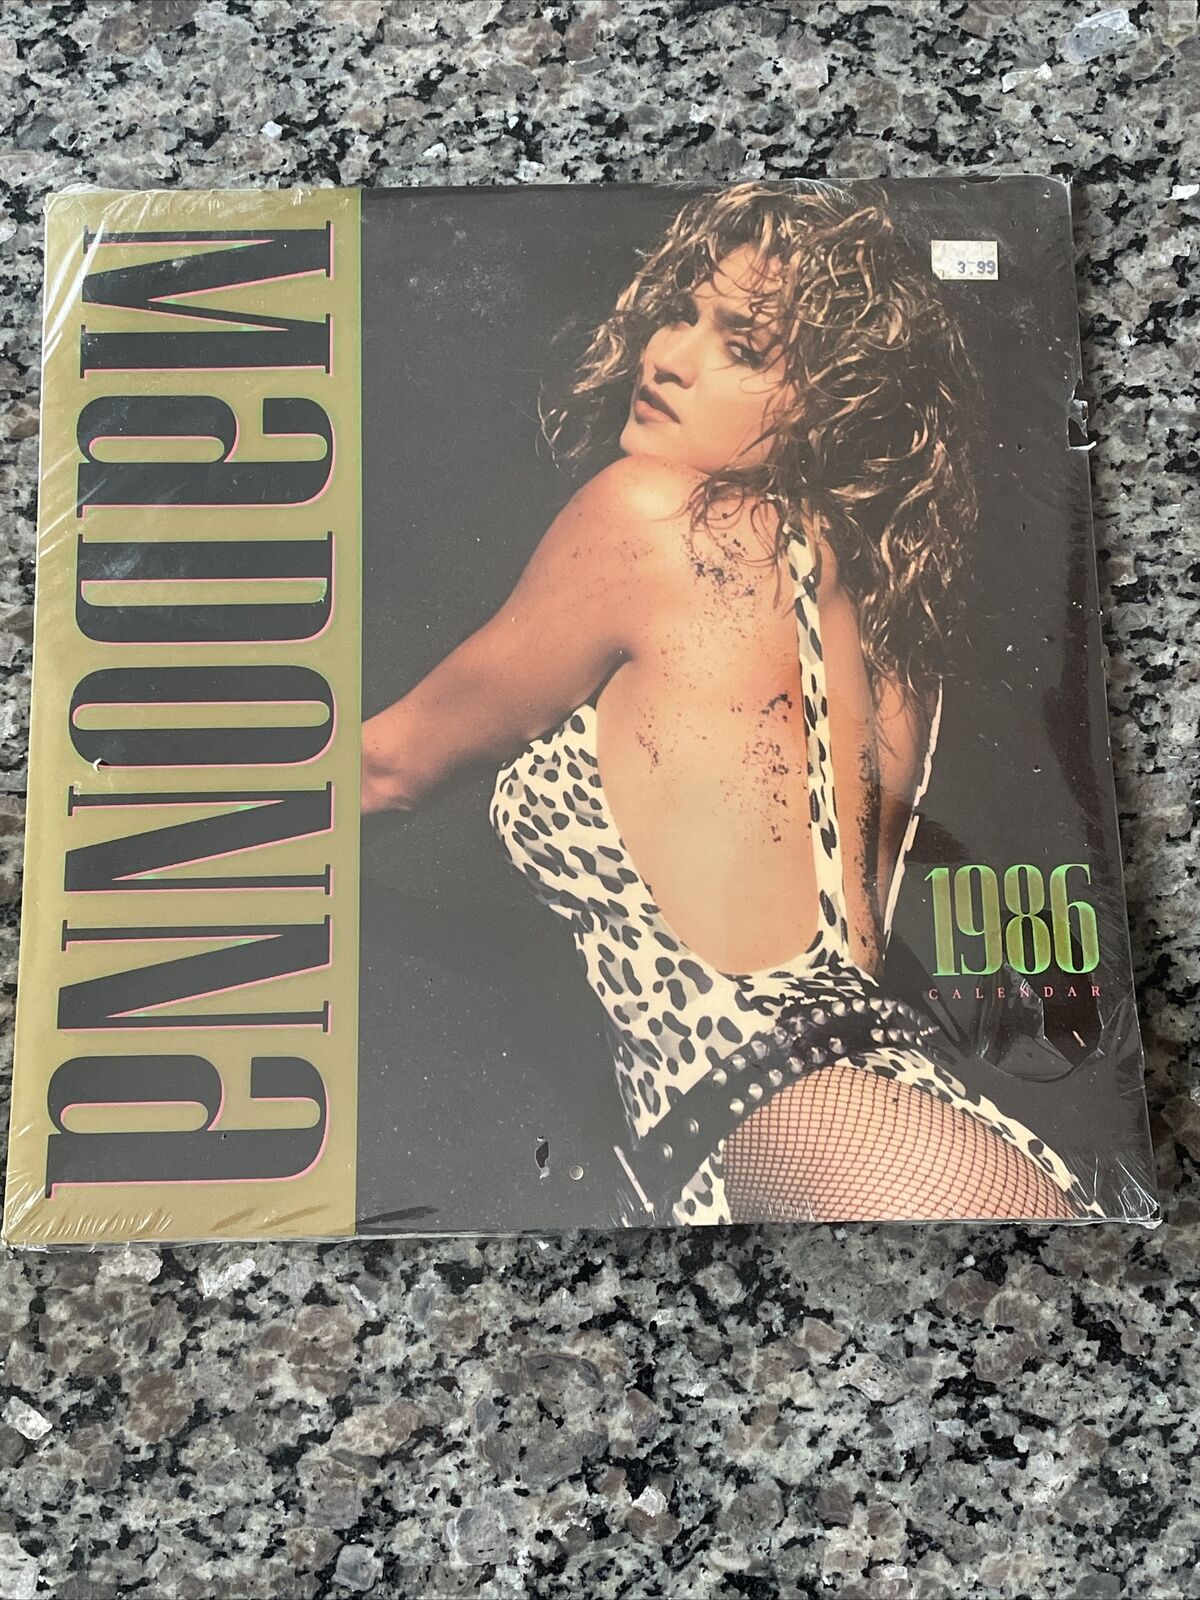 1986 Madonna Calendar Great Condition Never Opened Still In Original Plastic